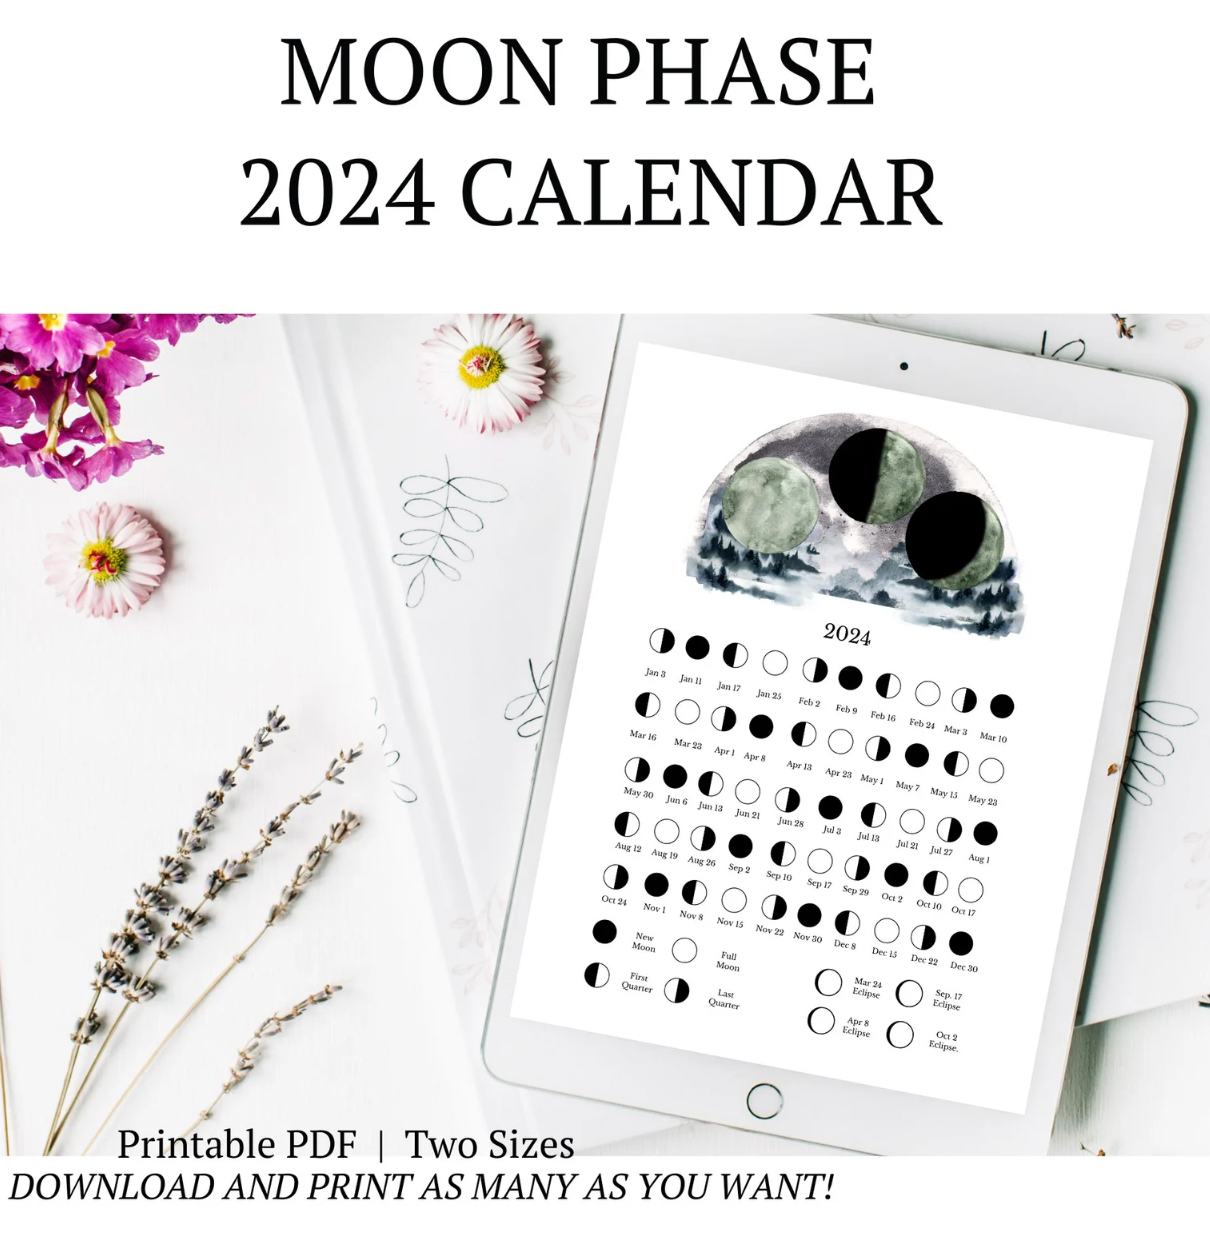 2024 Moon Phase Calendar from A Farm to Keep